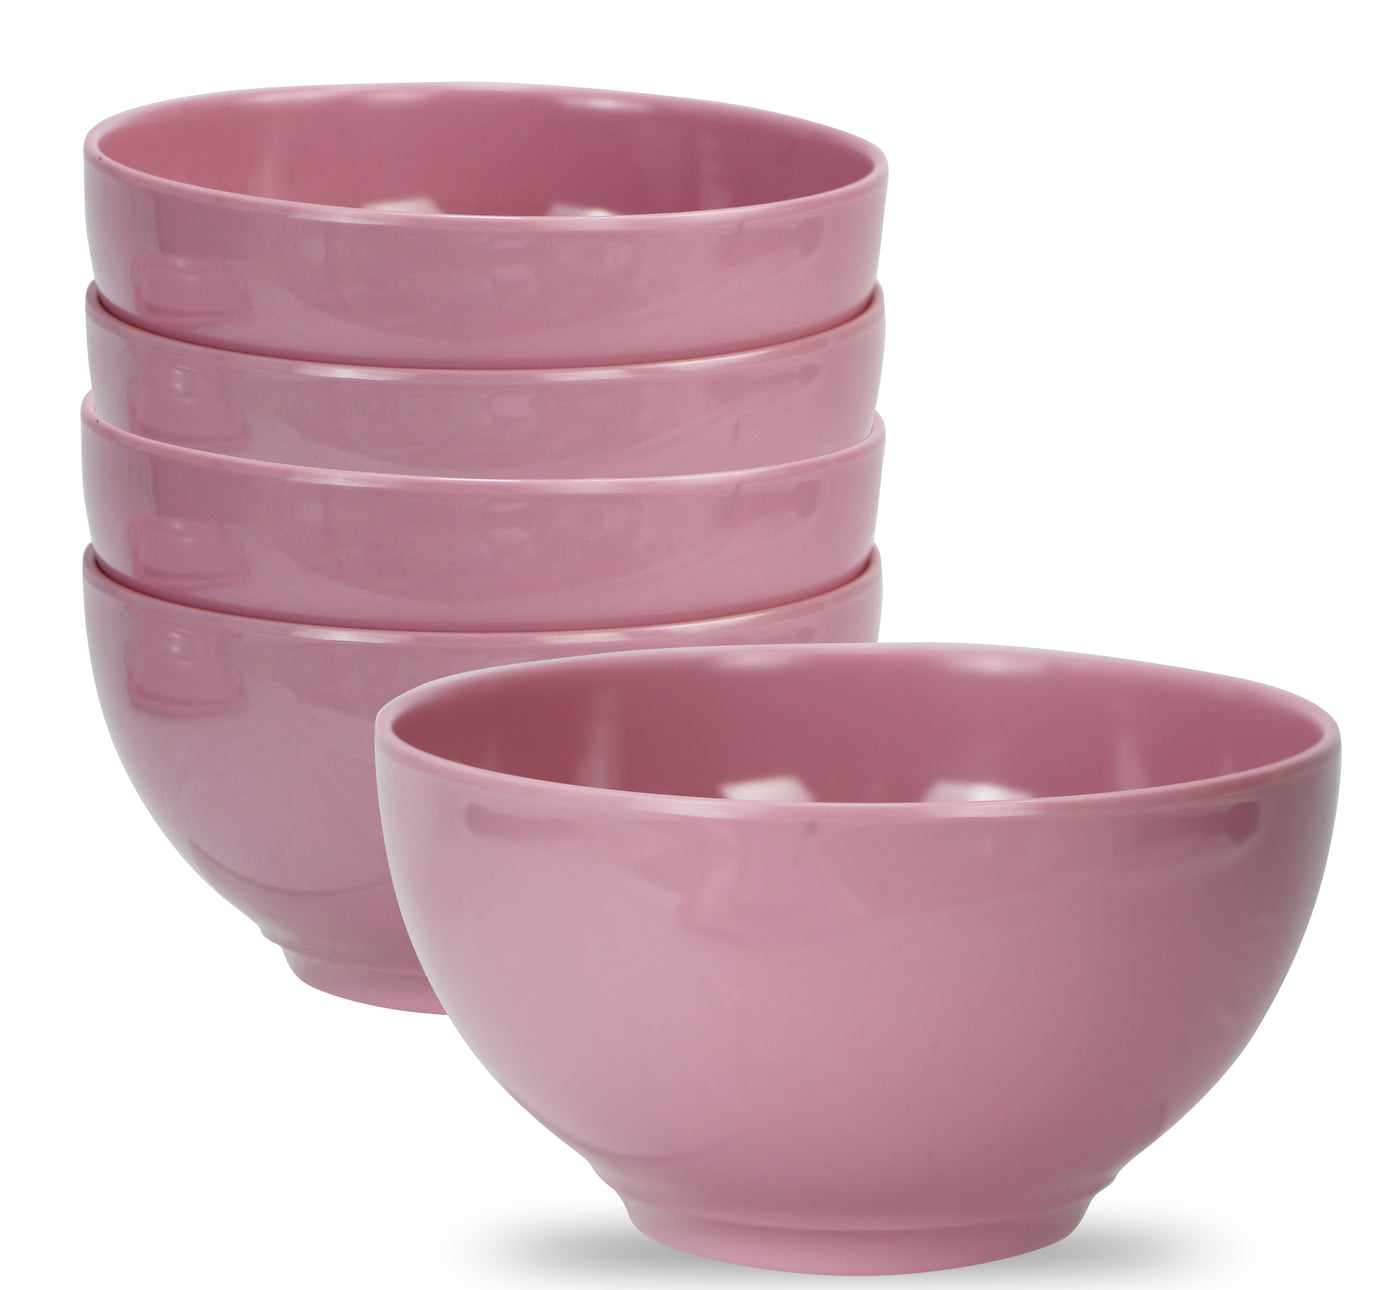 6 Piece Small Bowl Set - Replacement Lids – Reston Lloyd